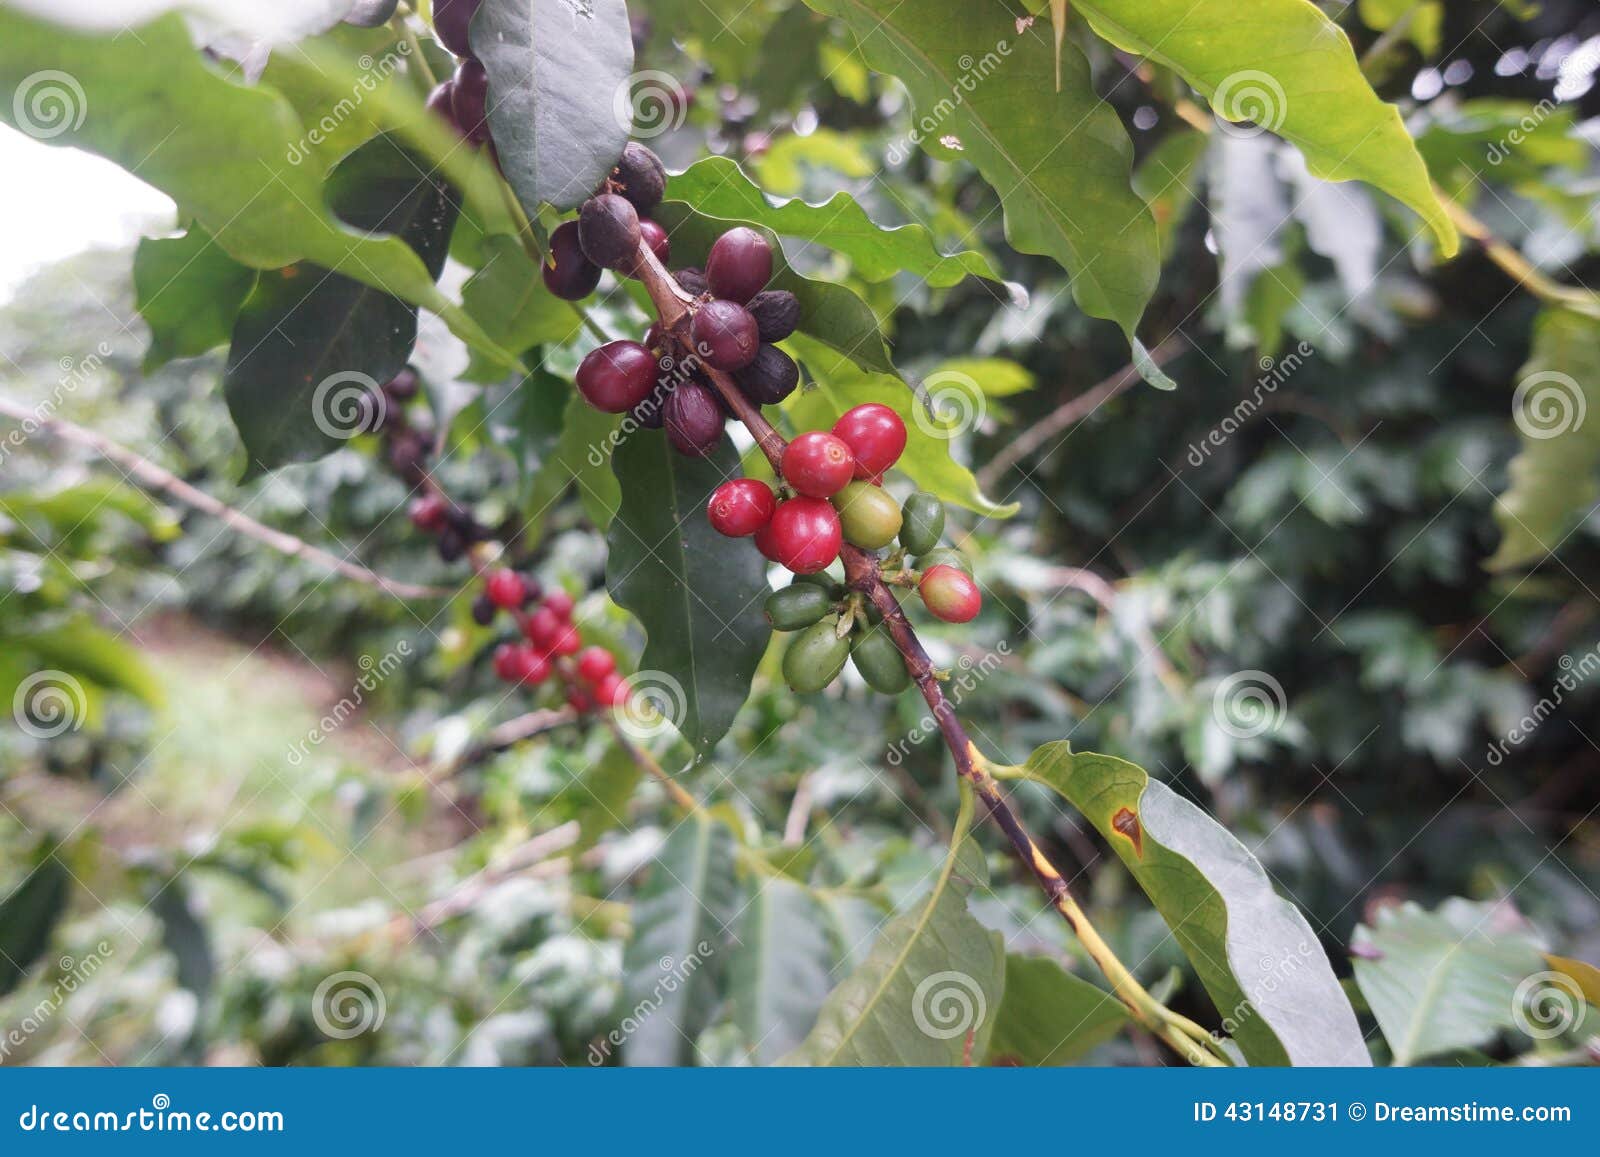 coffee plantation in the rural town of carmo de minas brazil